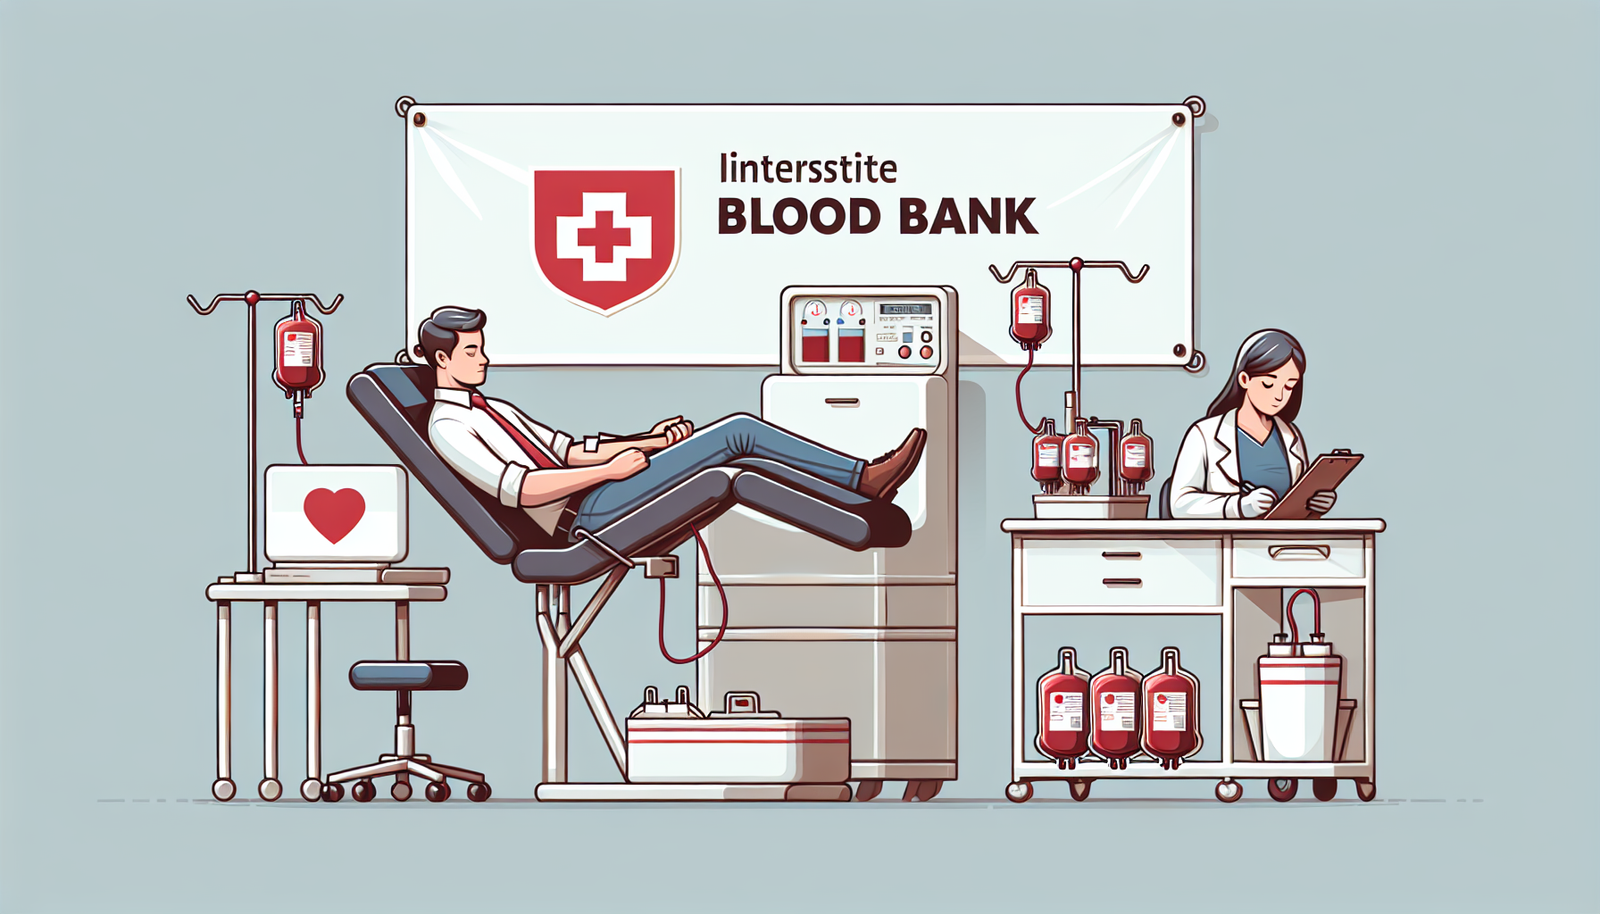 Interstate Blood Bank